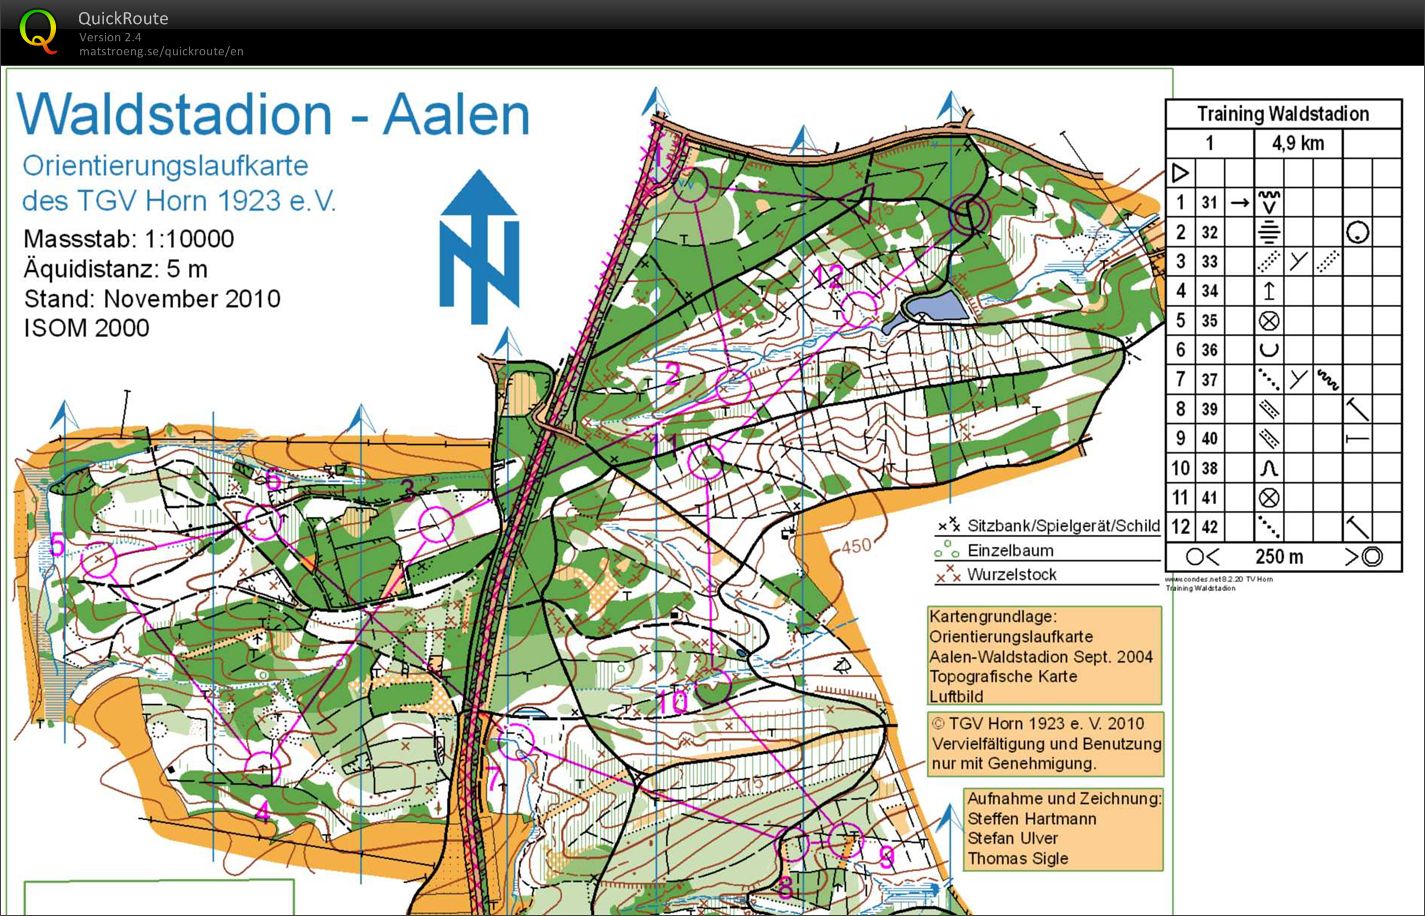 Training Aalen (2012-09-06)